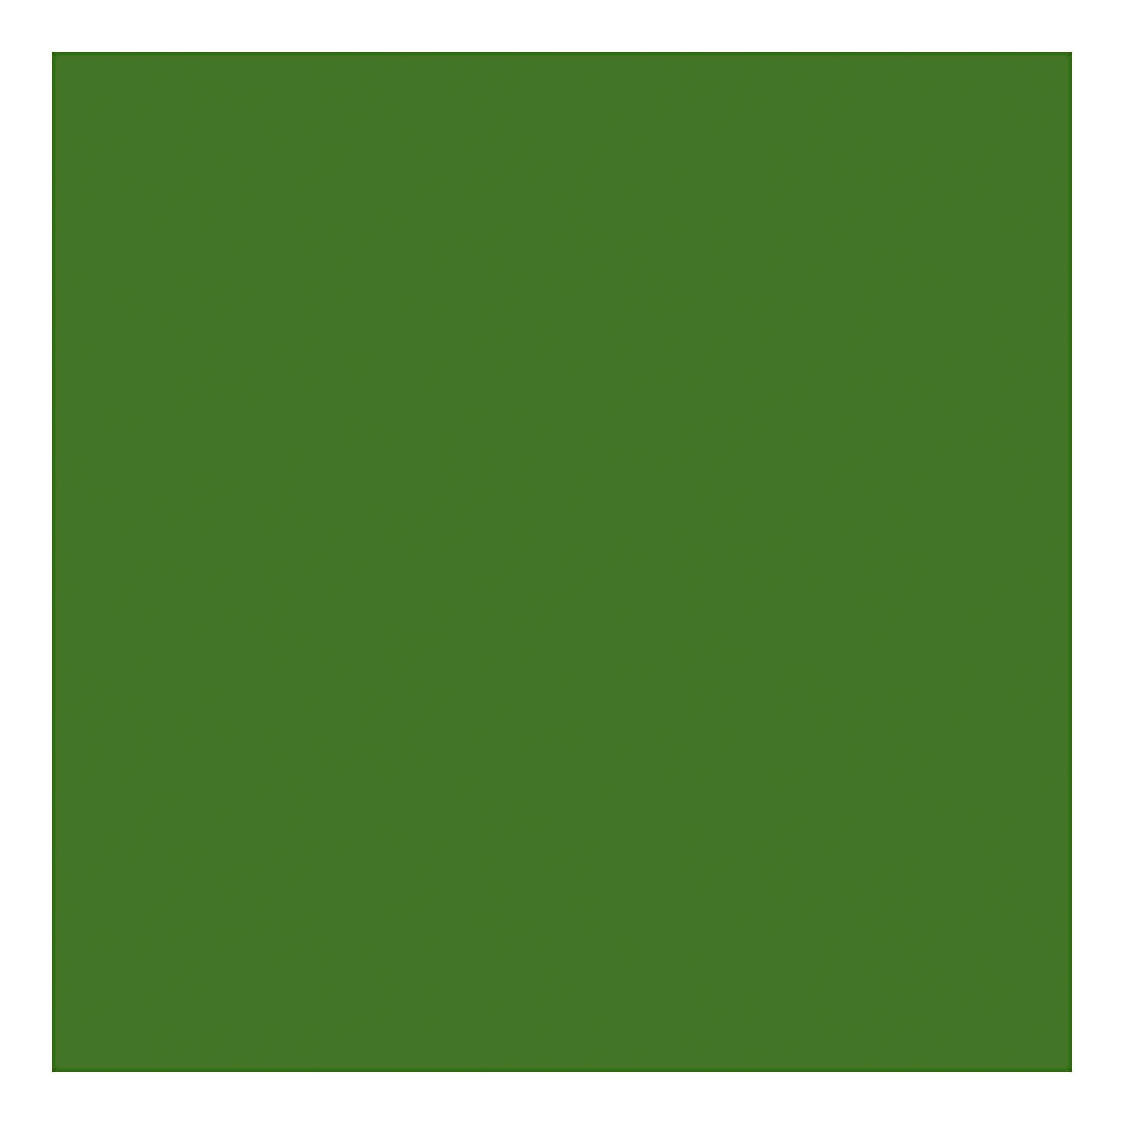 Creativ Company Textile Colour Vernice tessile semicoprente Verde oliva, 50ml